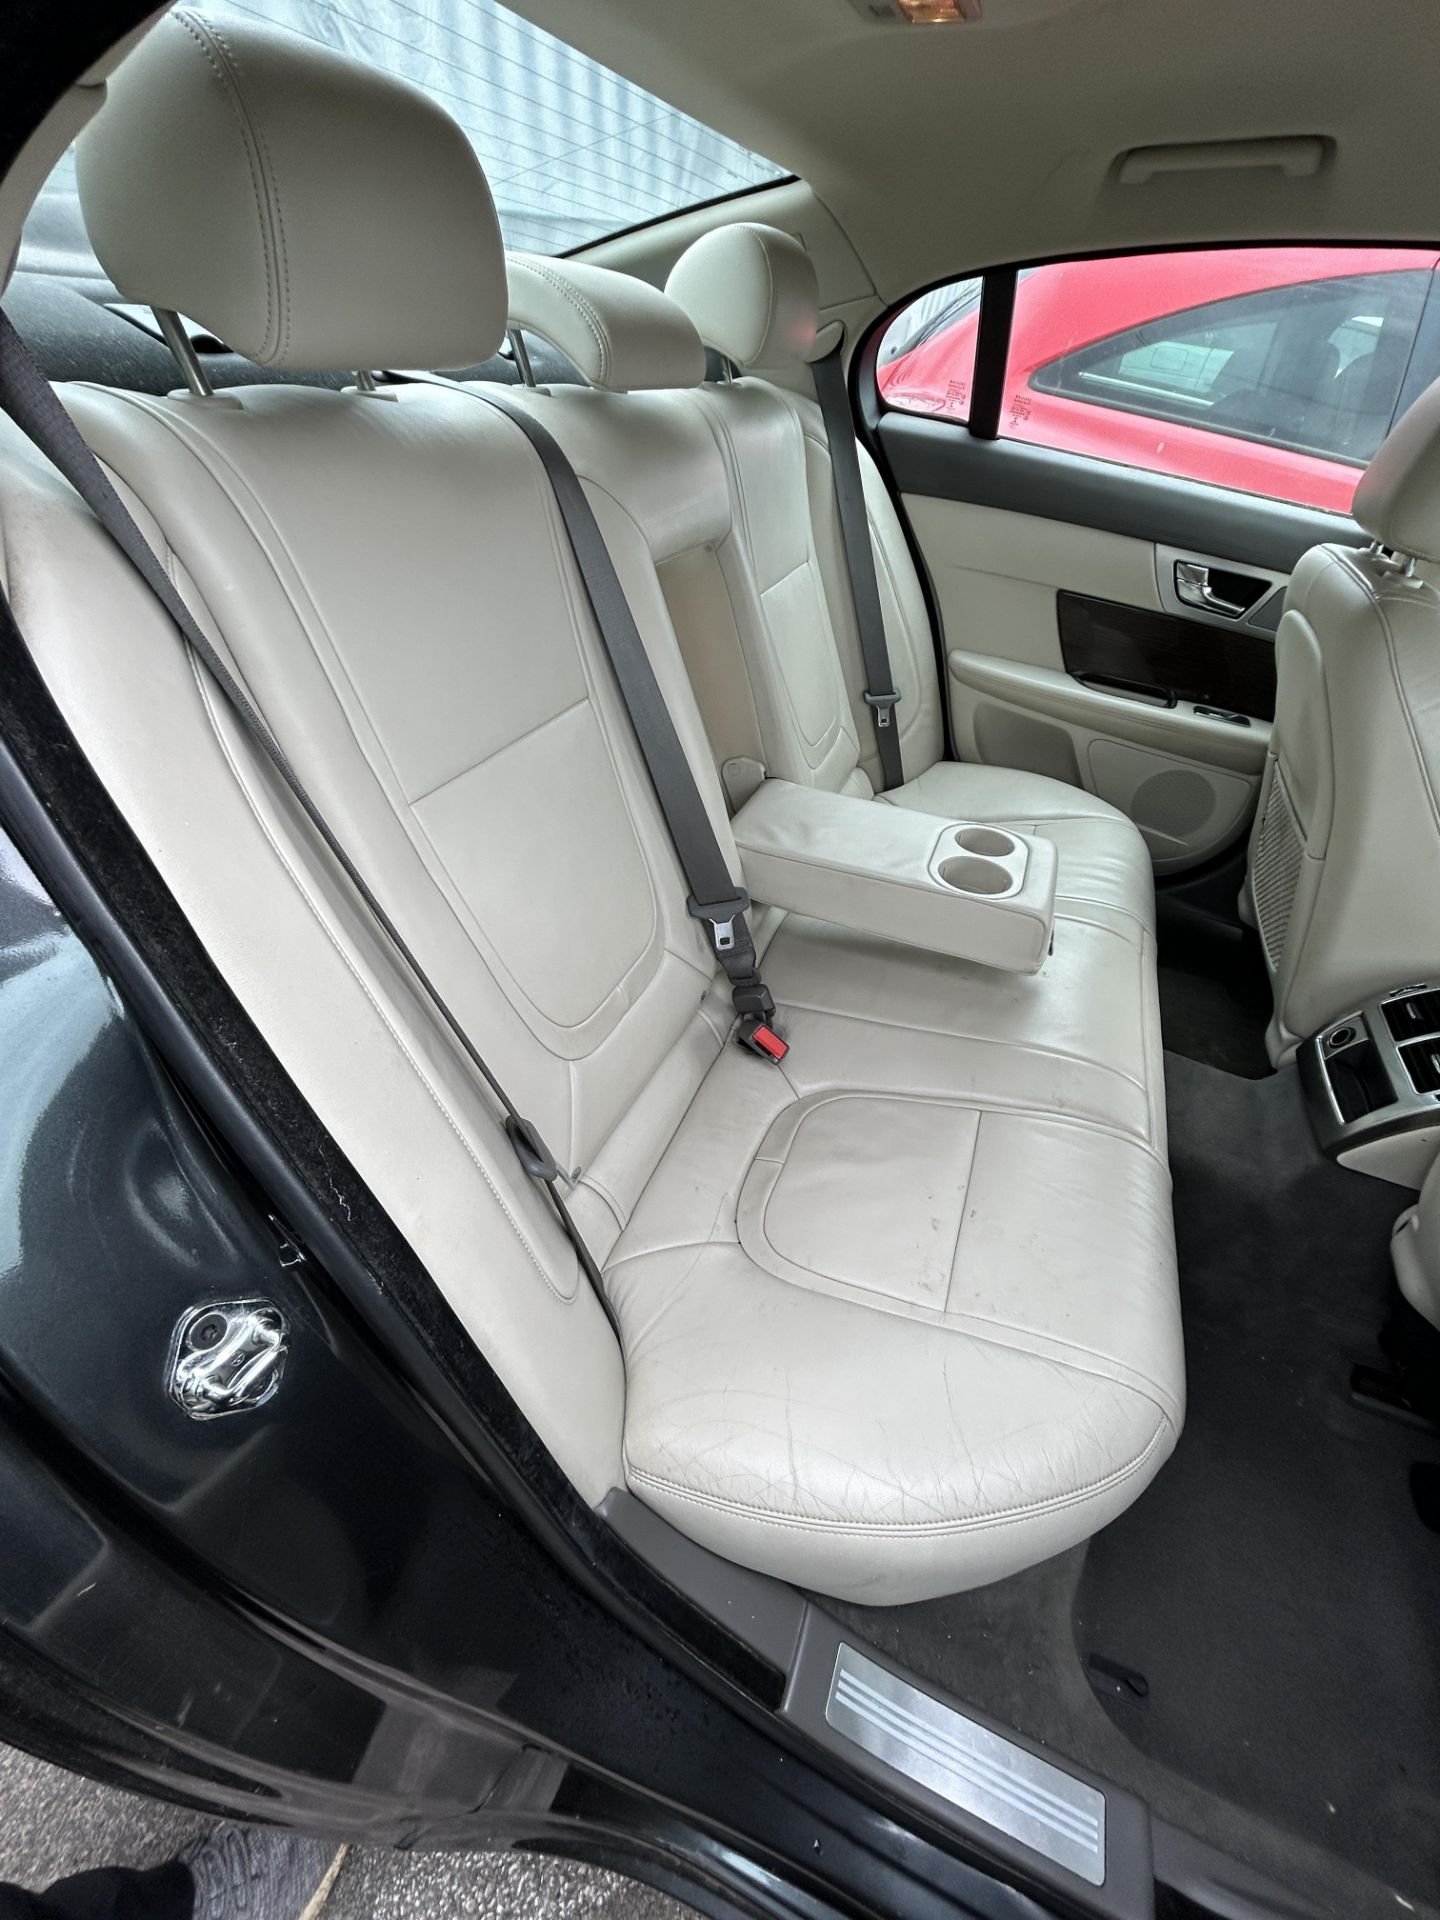 Jaguar XF Premium Luxury D Auto Diesel 4 Door Saloon | PO13 TOH | 165,697 Miles - Bild 4 aus 9